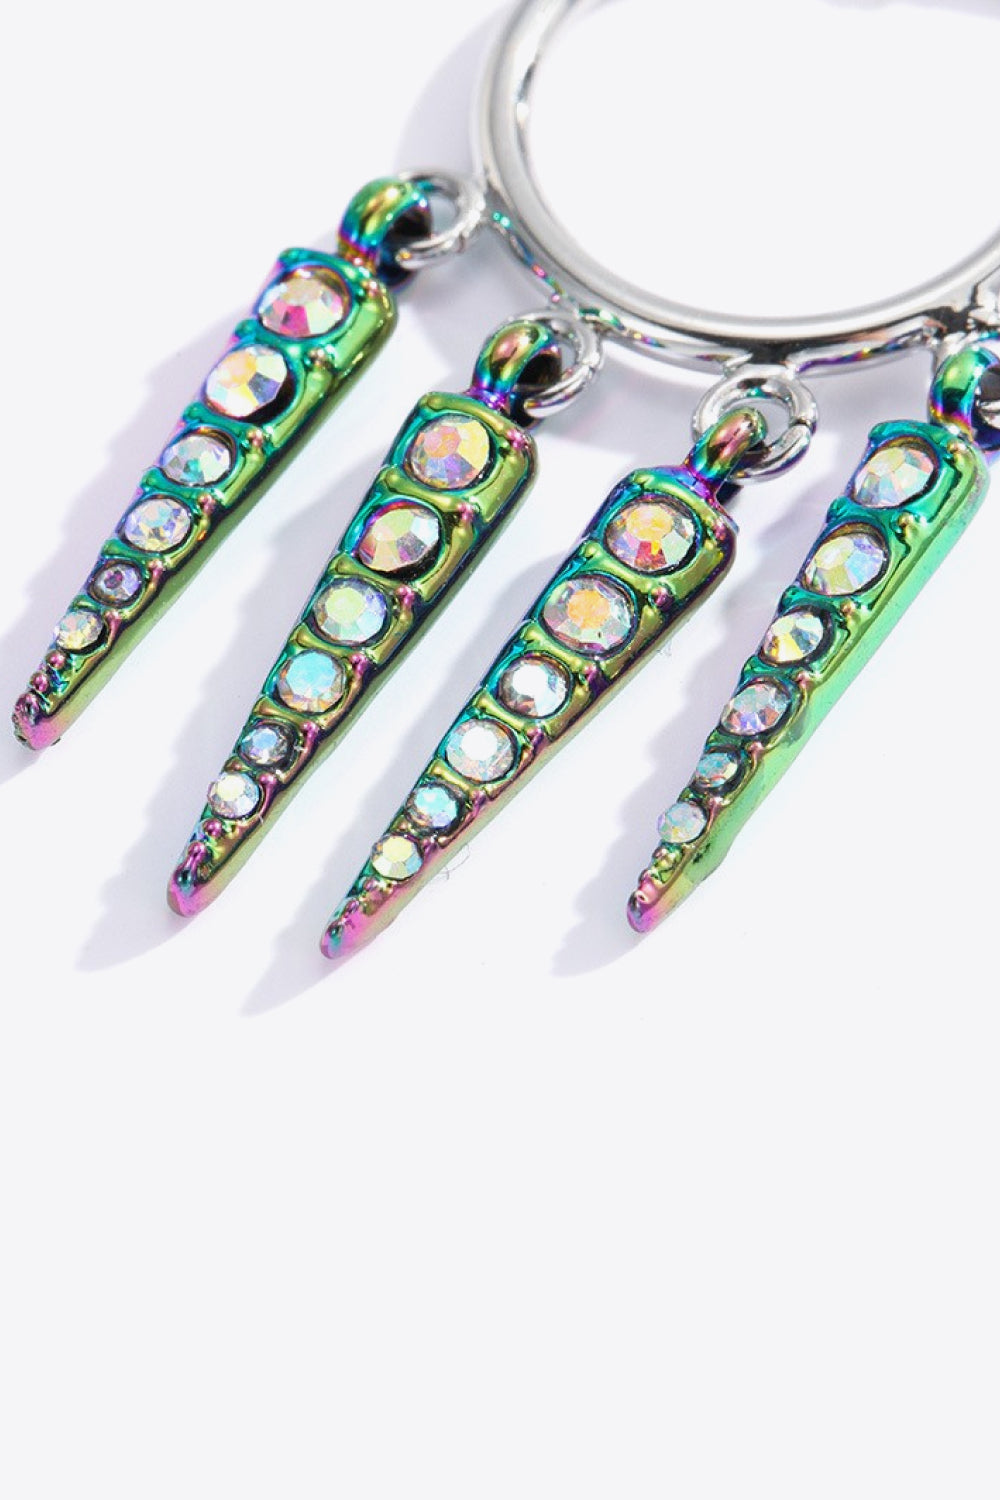 5-Pair Wholesale Multicolored Rhinestone Geometric Earrings